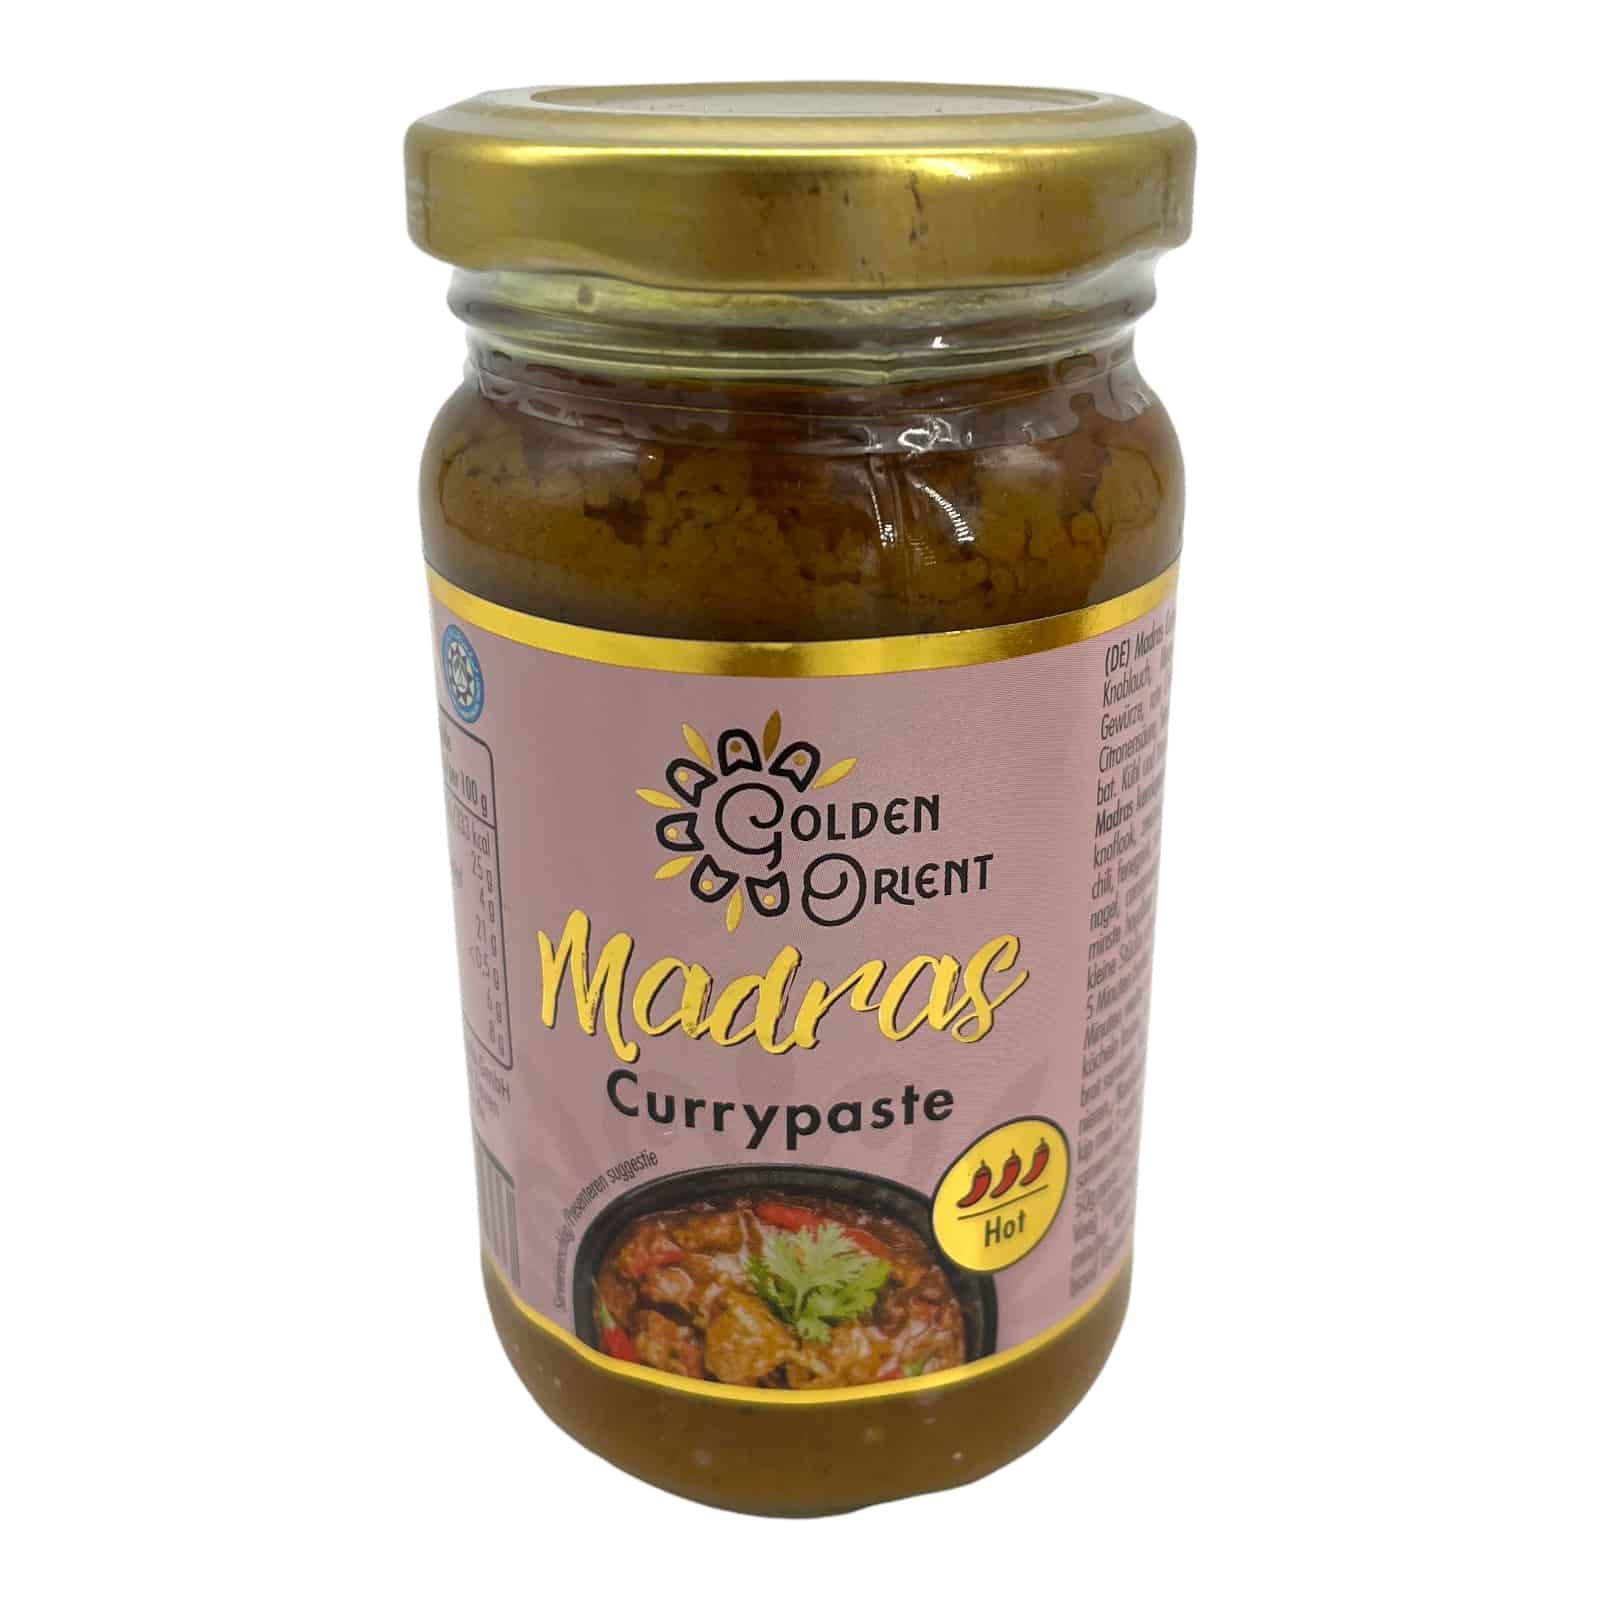 GOLDEN ORIENT Madras Curry Paste 200g